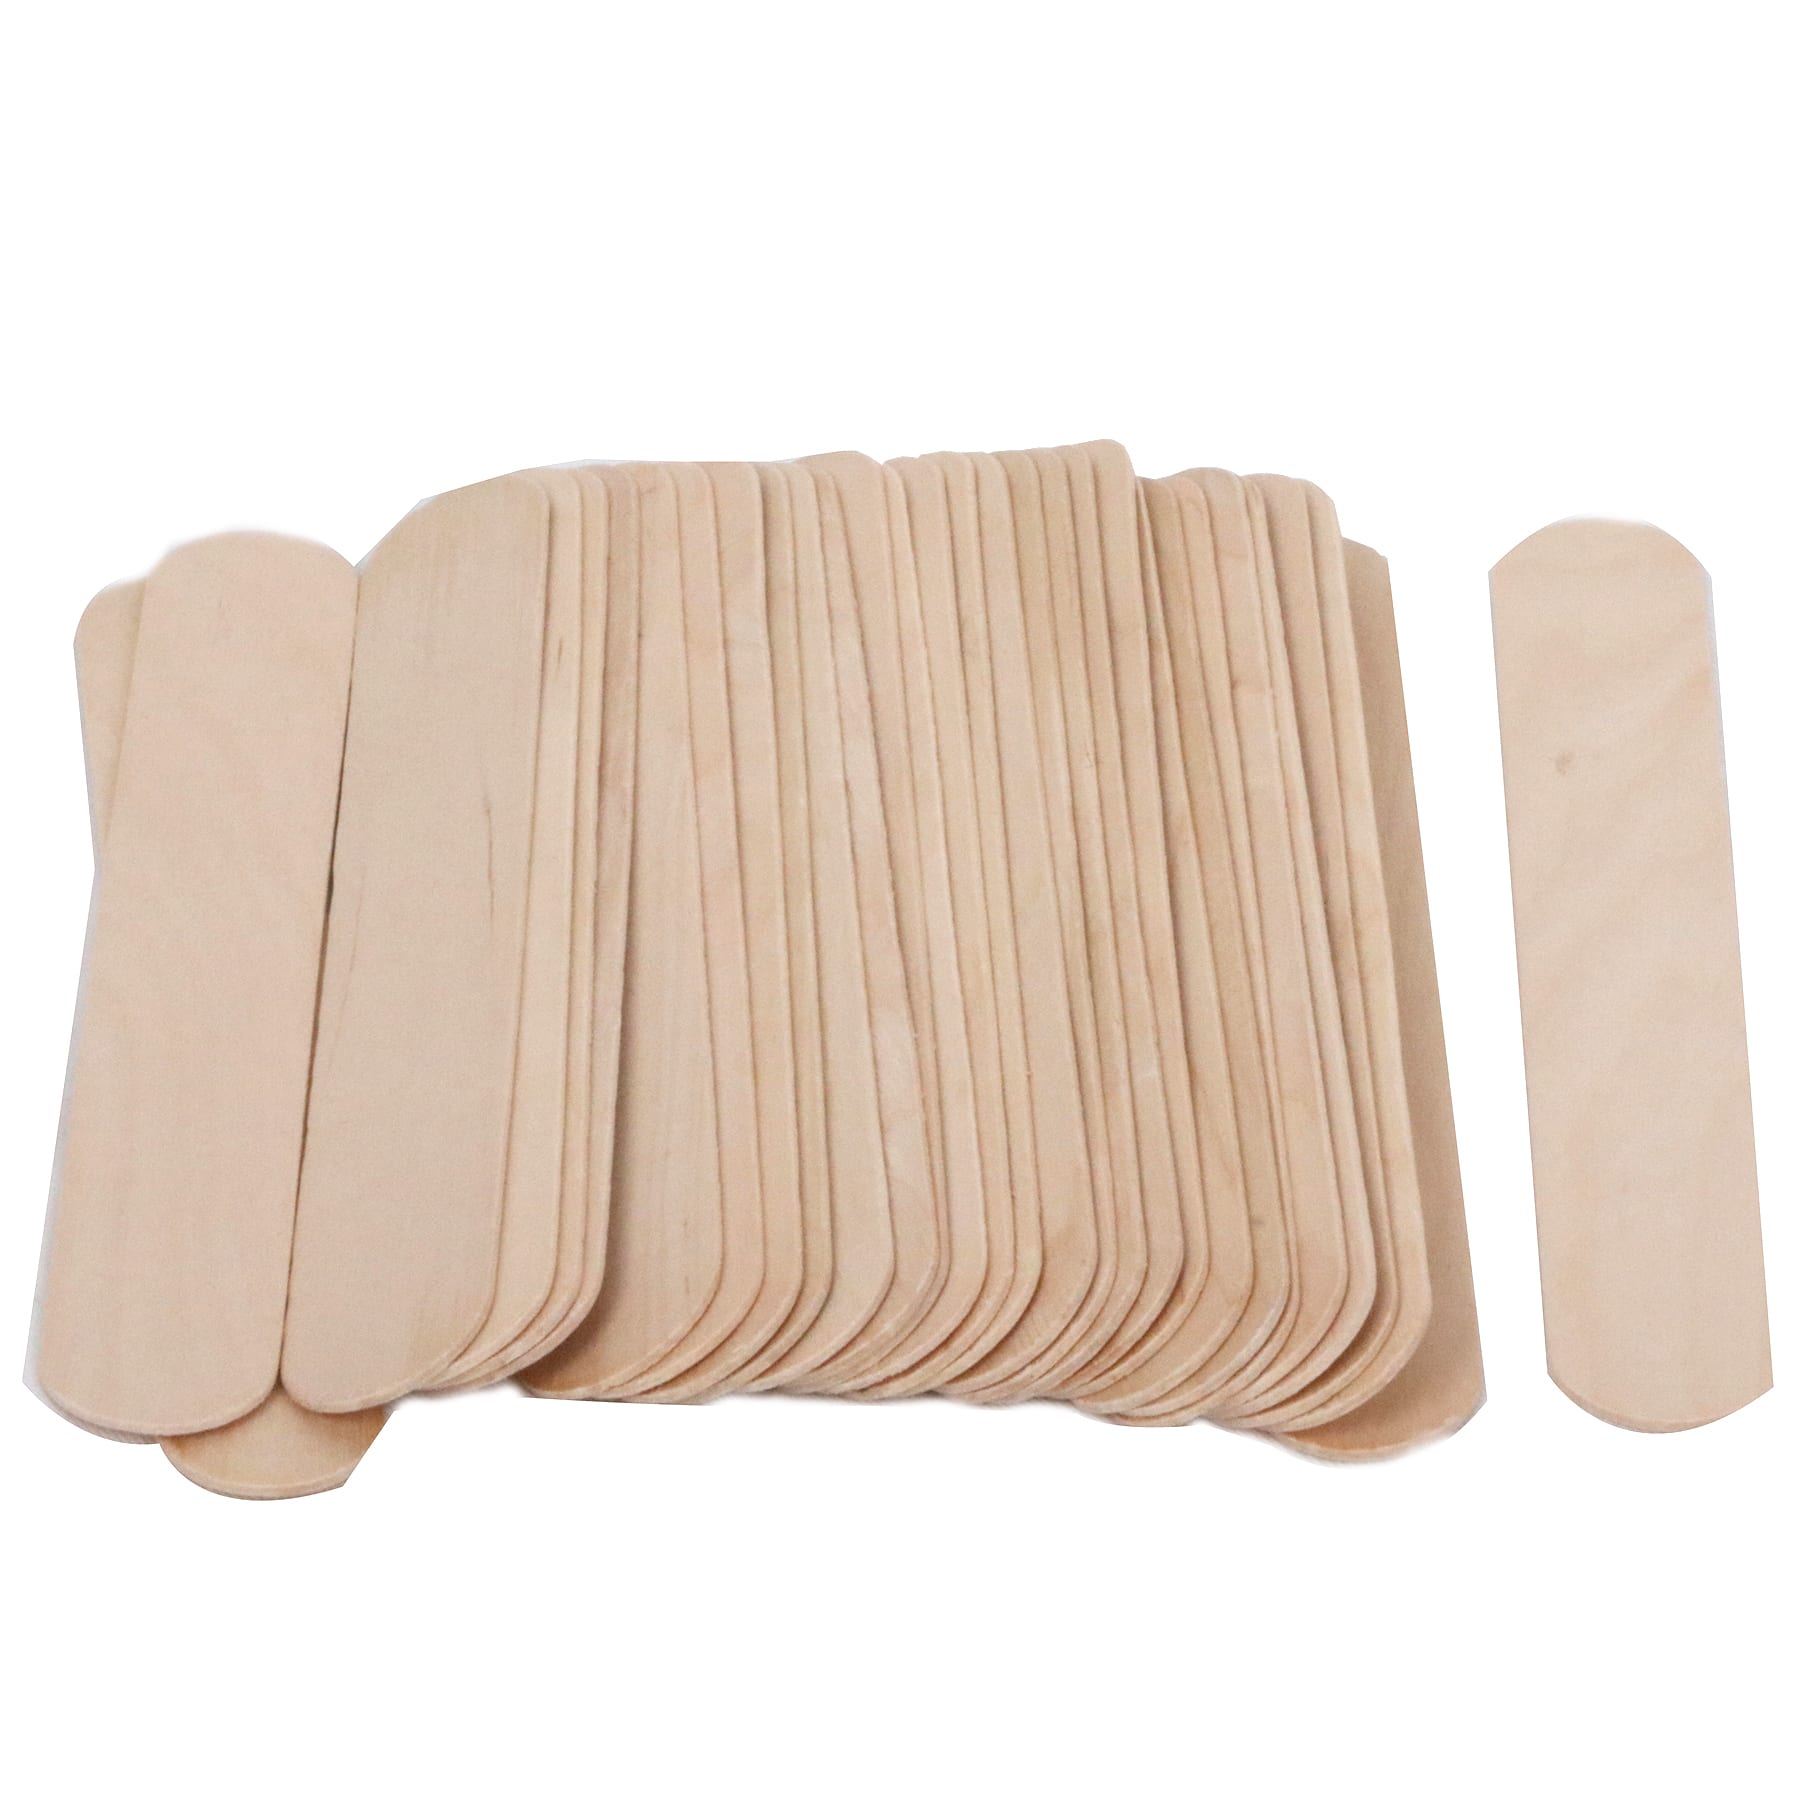 12 Packs: 30 ct. (360 total) Wavy Jumbo Wood Craft Sticks by